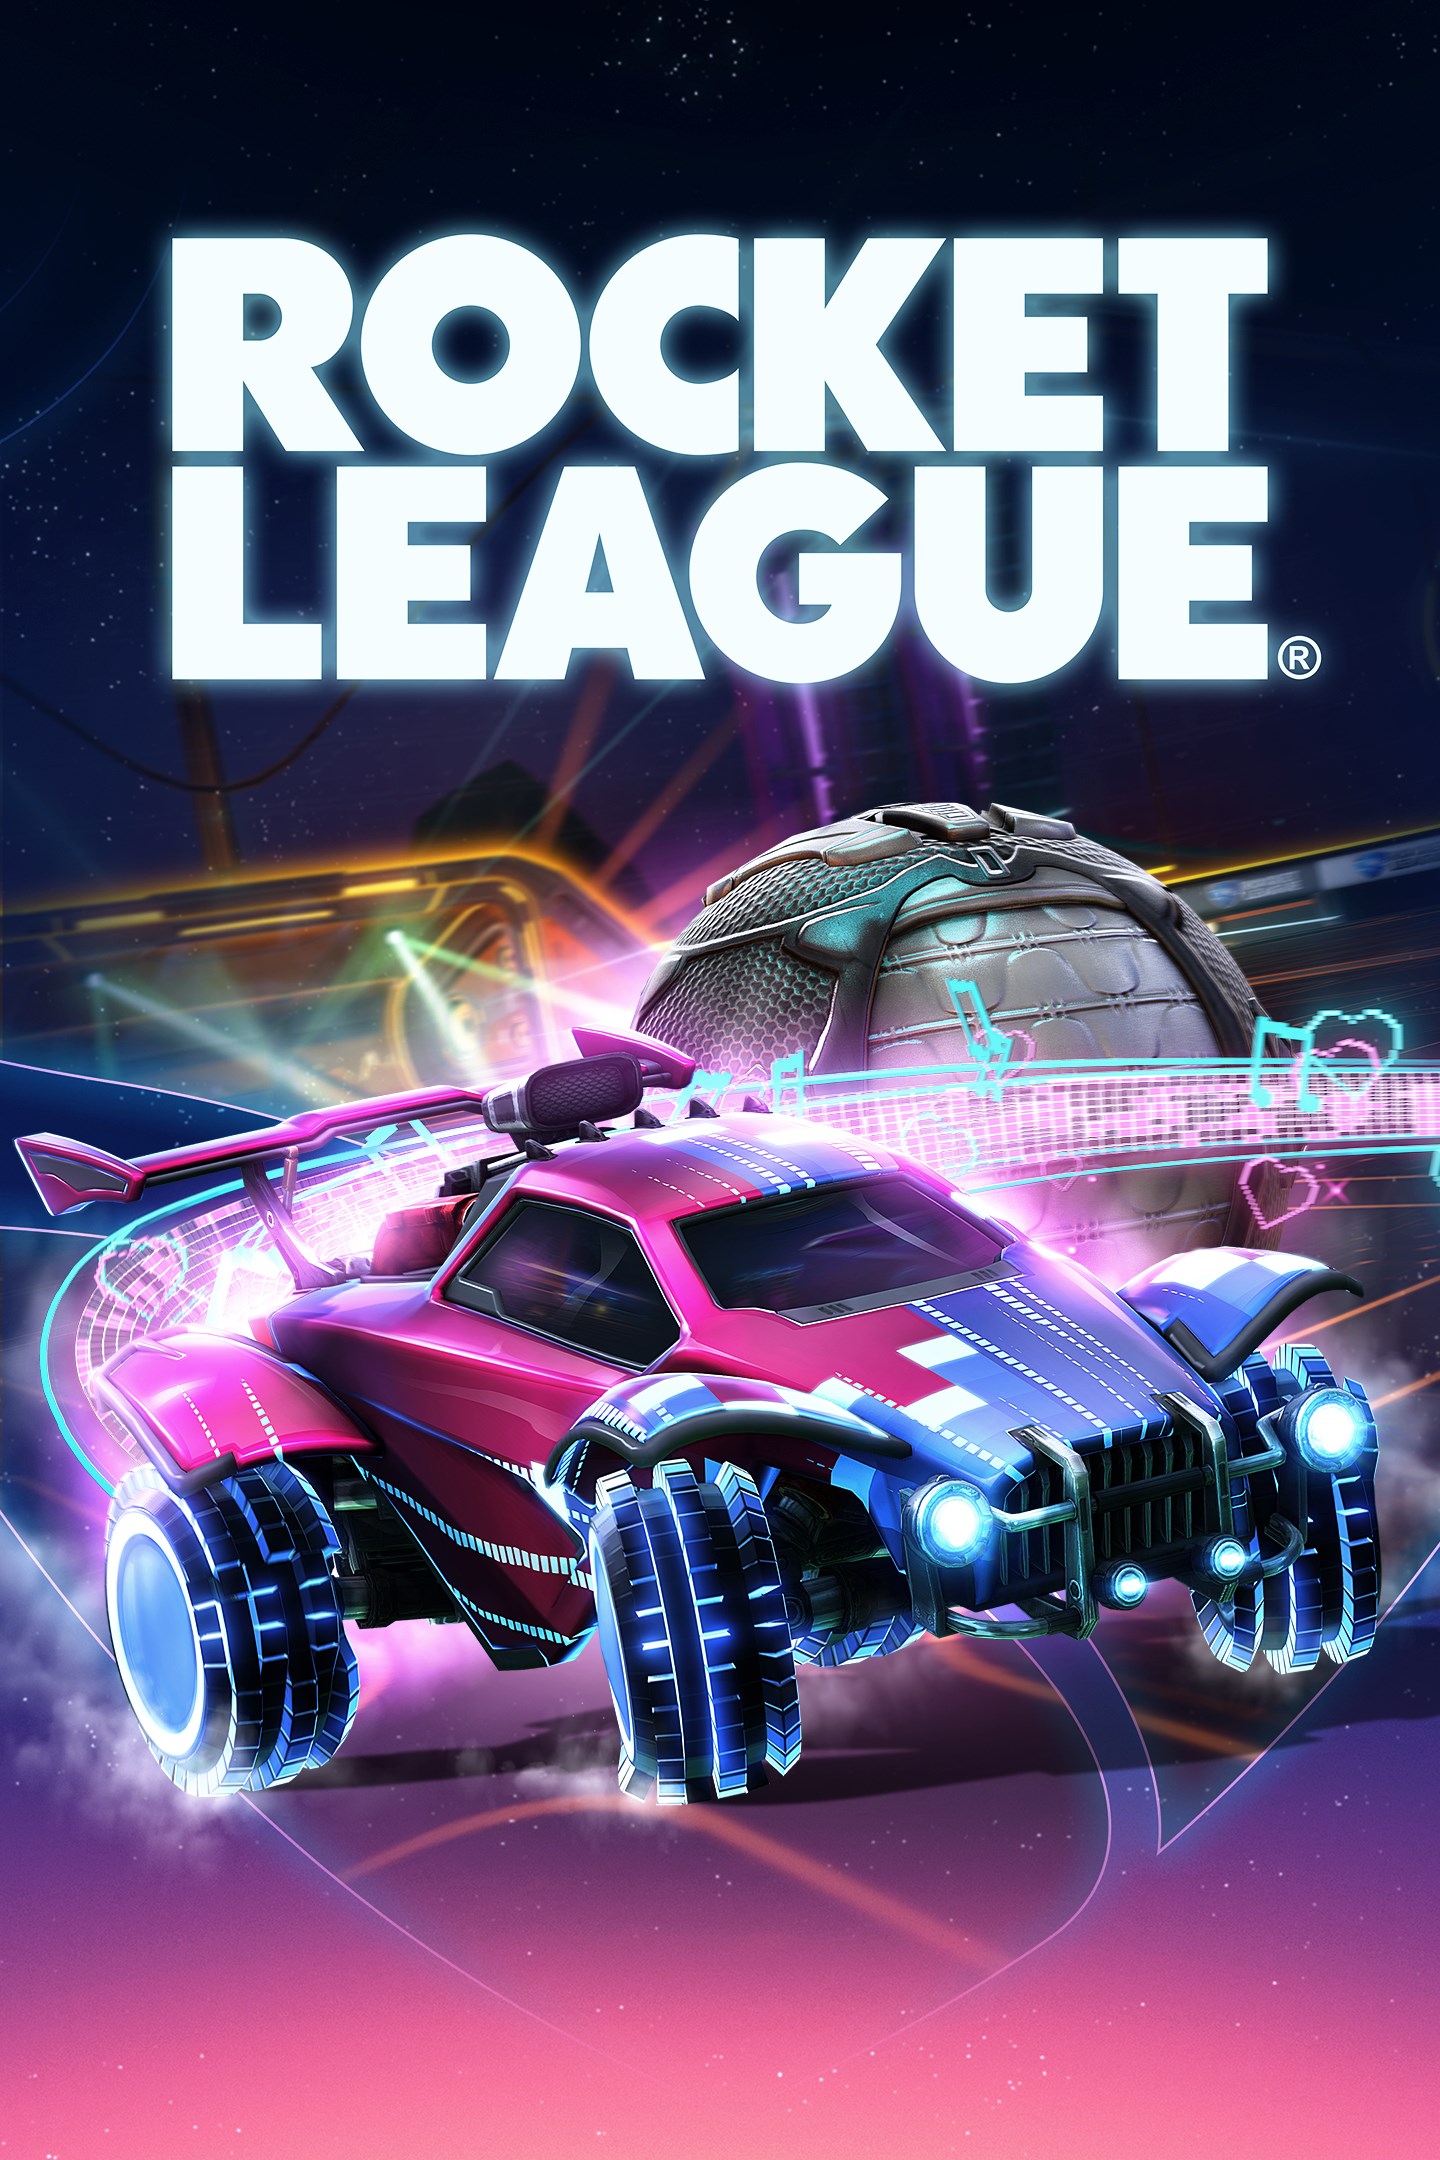 rocket league xbox one digital download